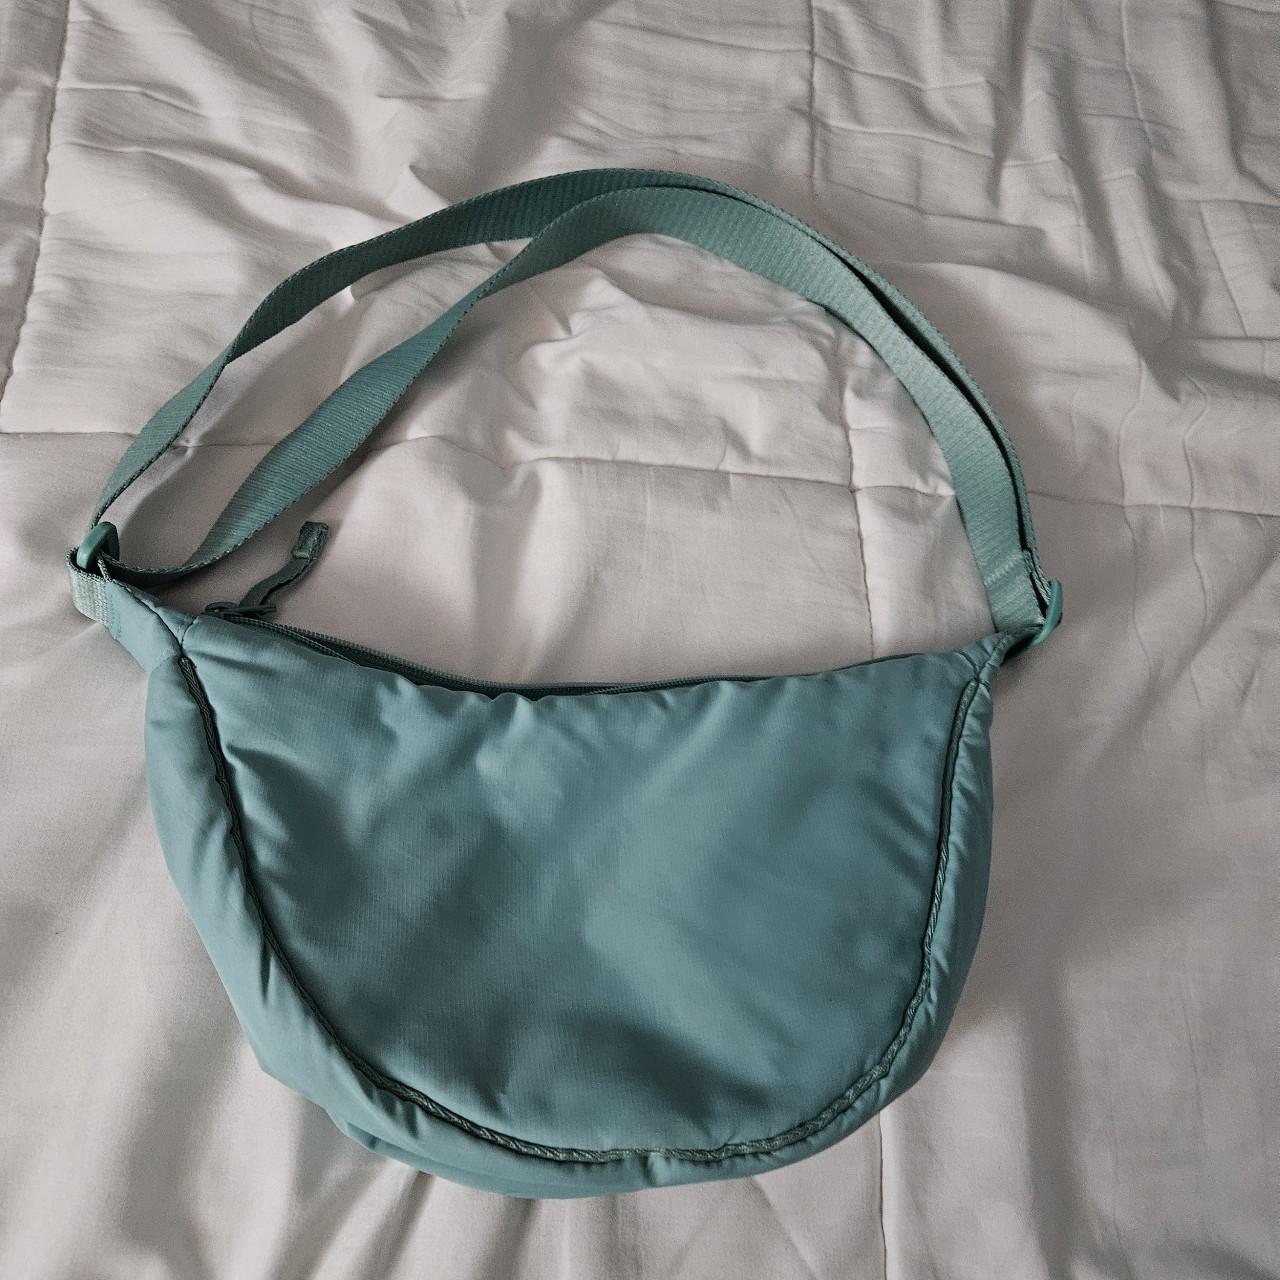 Uniqlo mini round shoulder bag in the blue color! I... - Depop